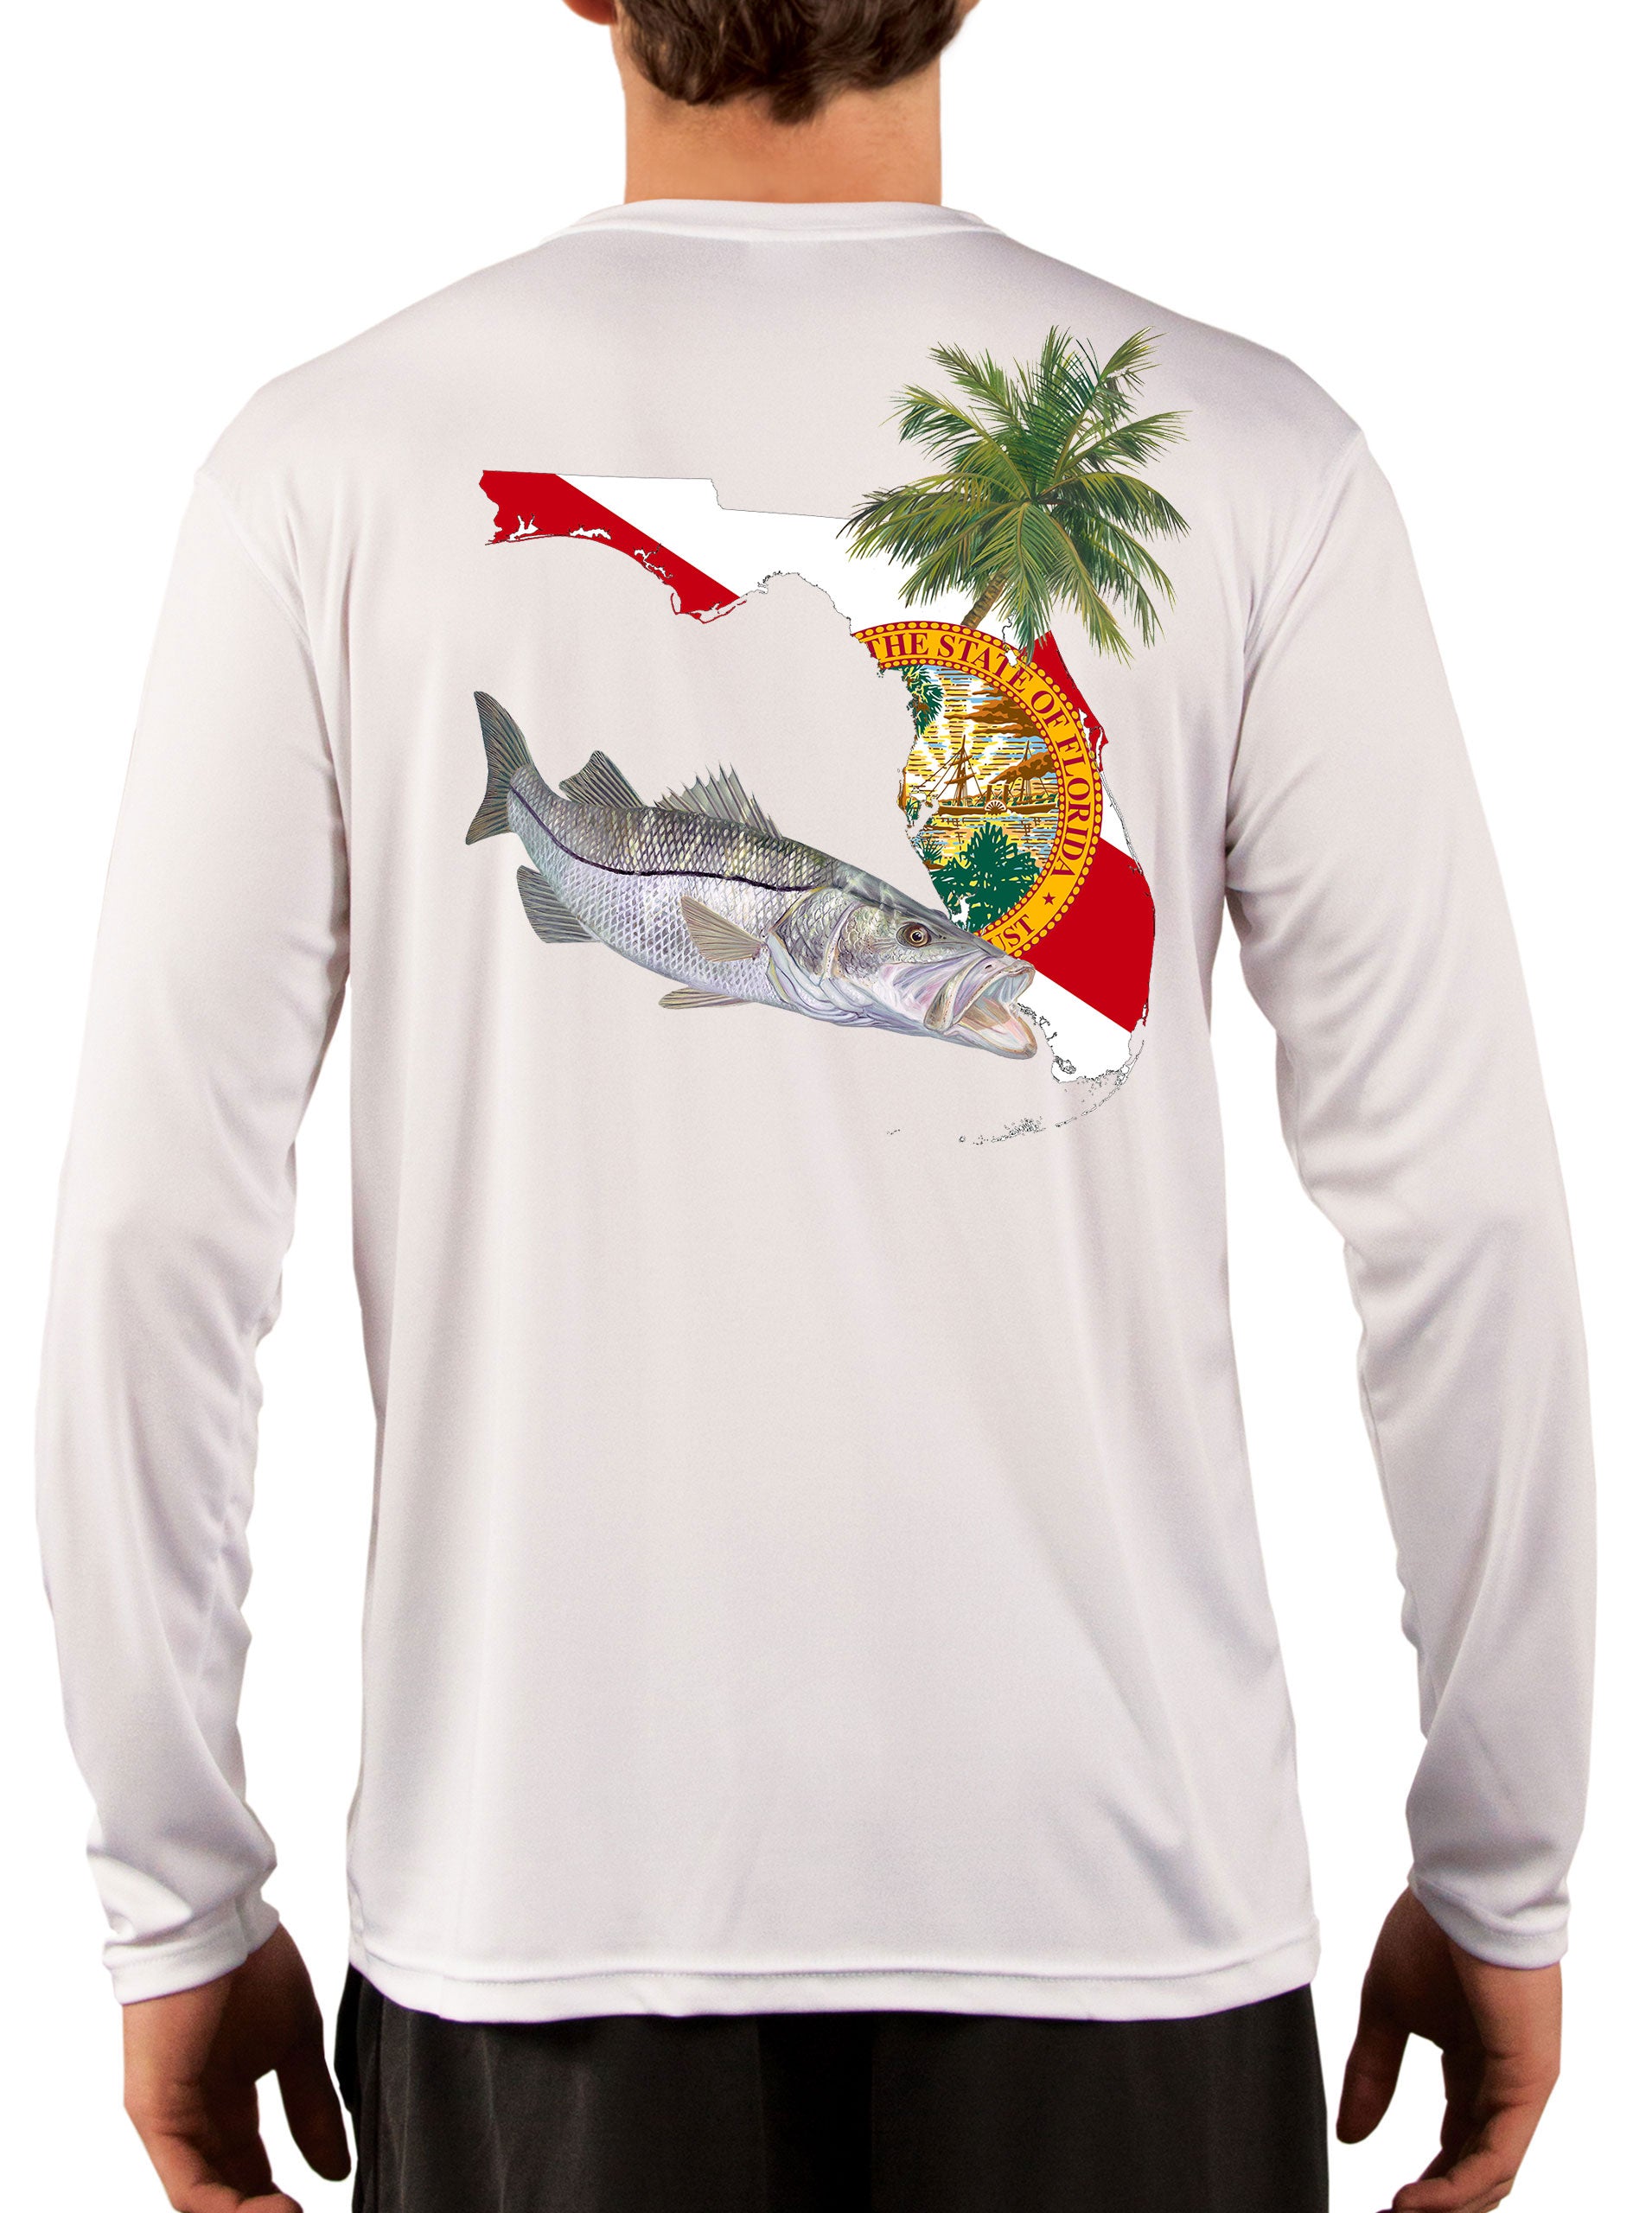 Florida Snook Long Sleeve Mens Fishing Shirt with Florida State Flag Sleeve